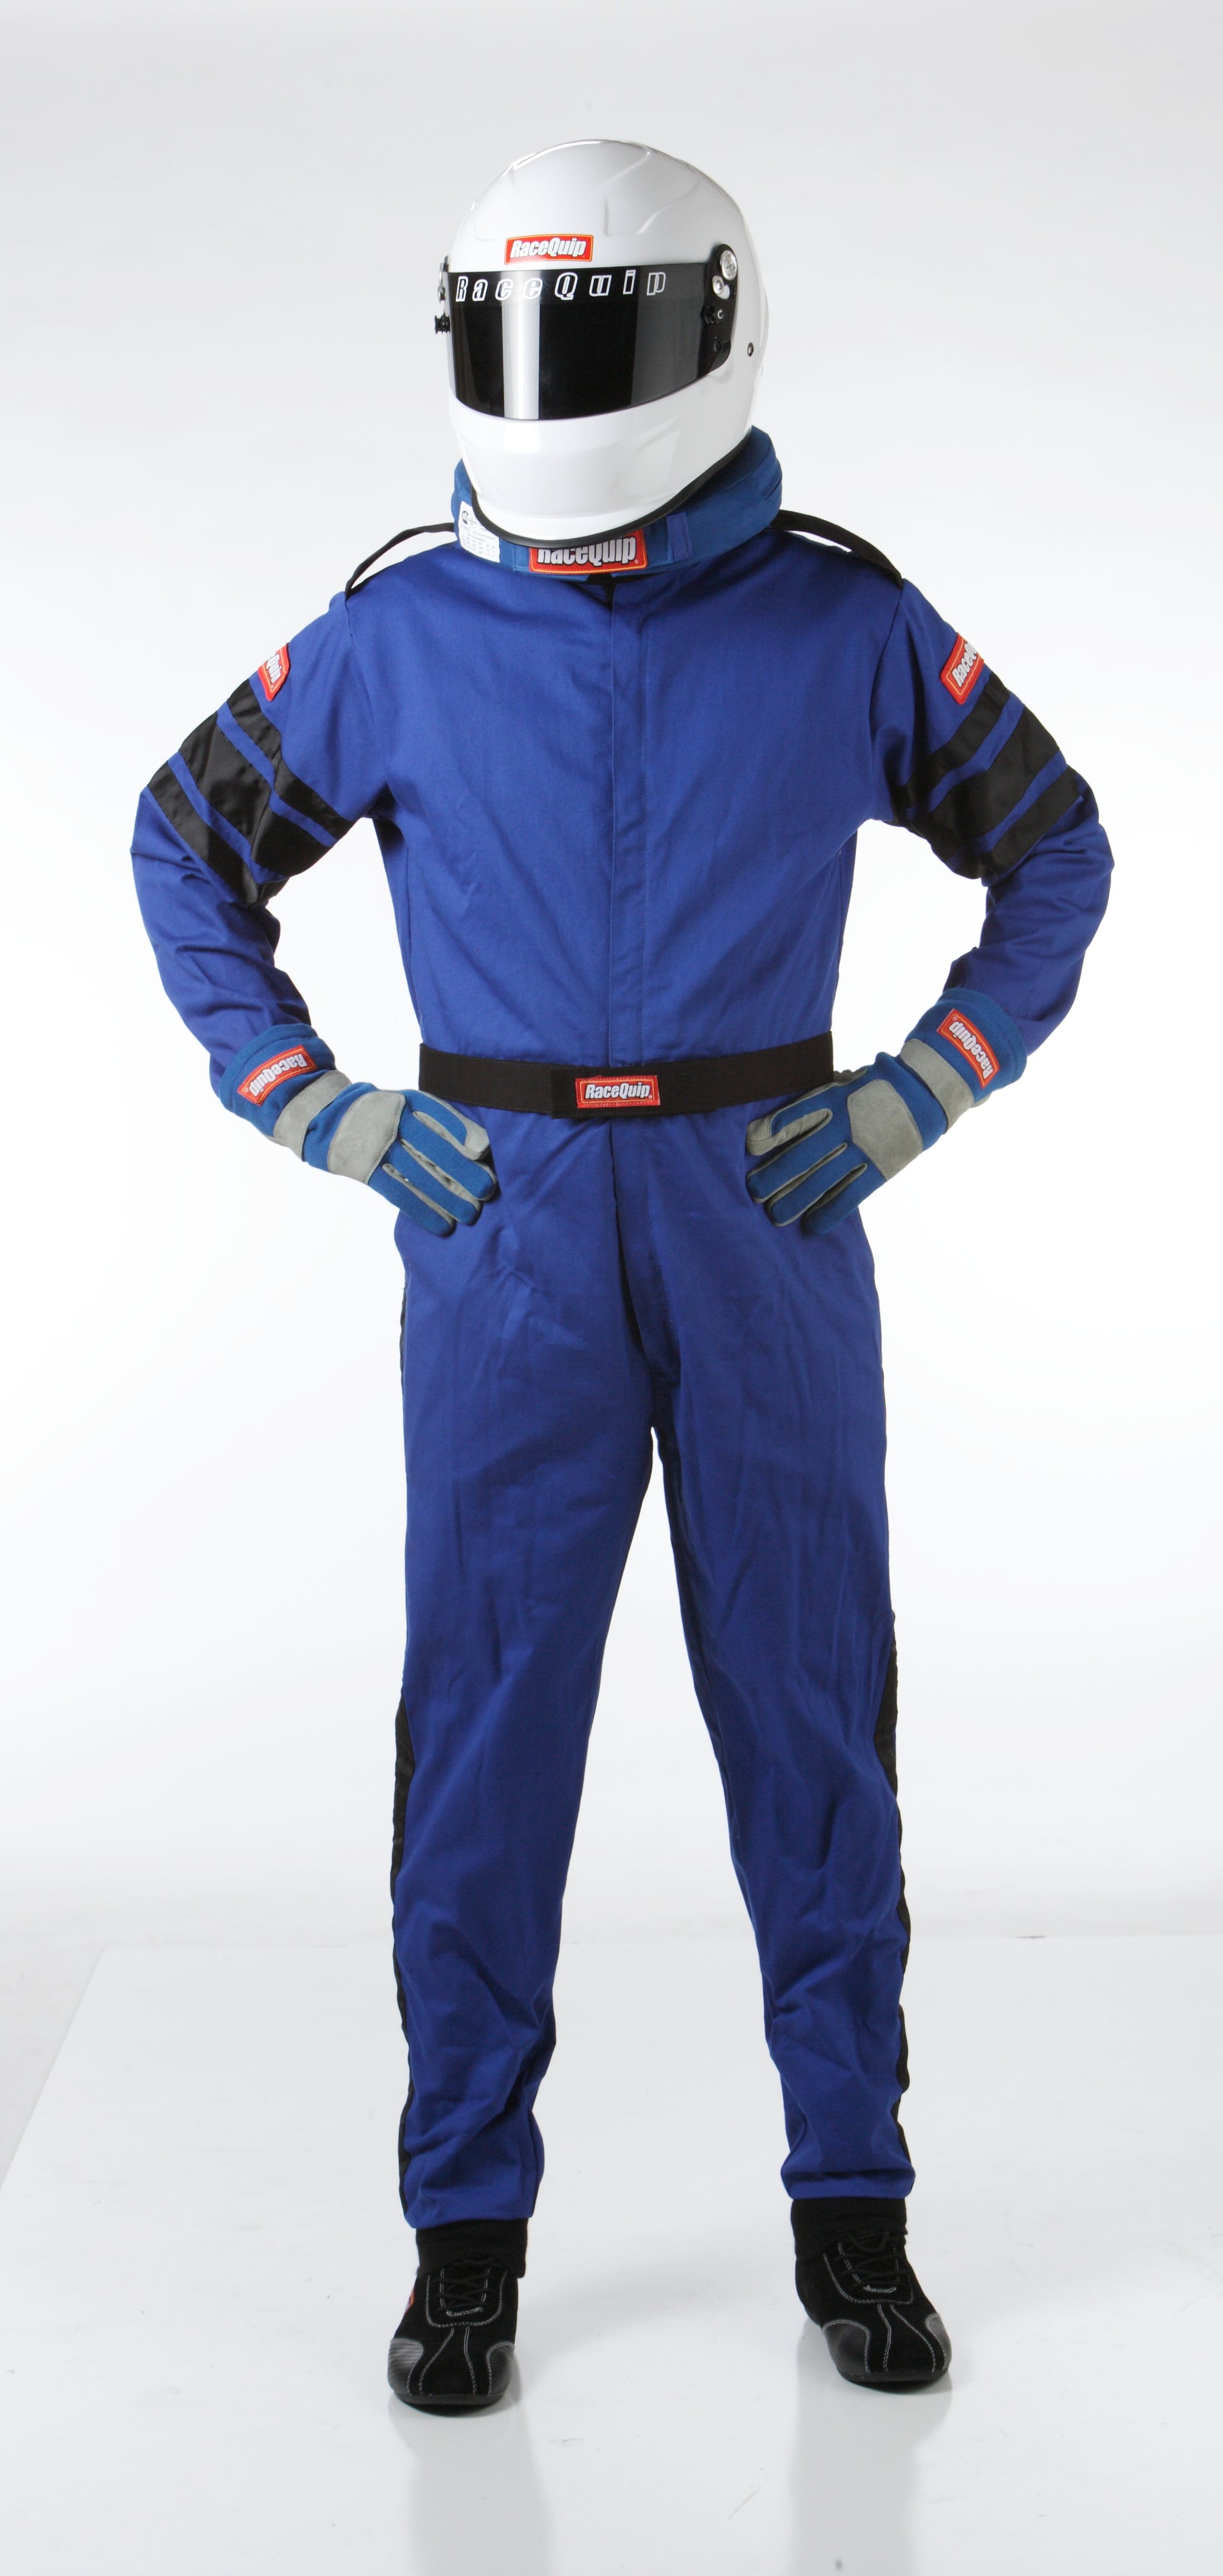 RaceQuip 110024 SFI-1 Pyrovatex One-Piece Single-Layer Racing Fire Suit (Blue, Medium-Tall)